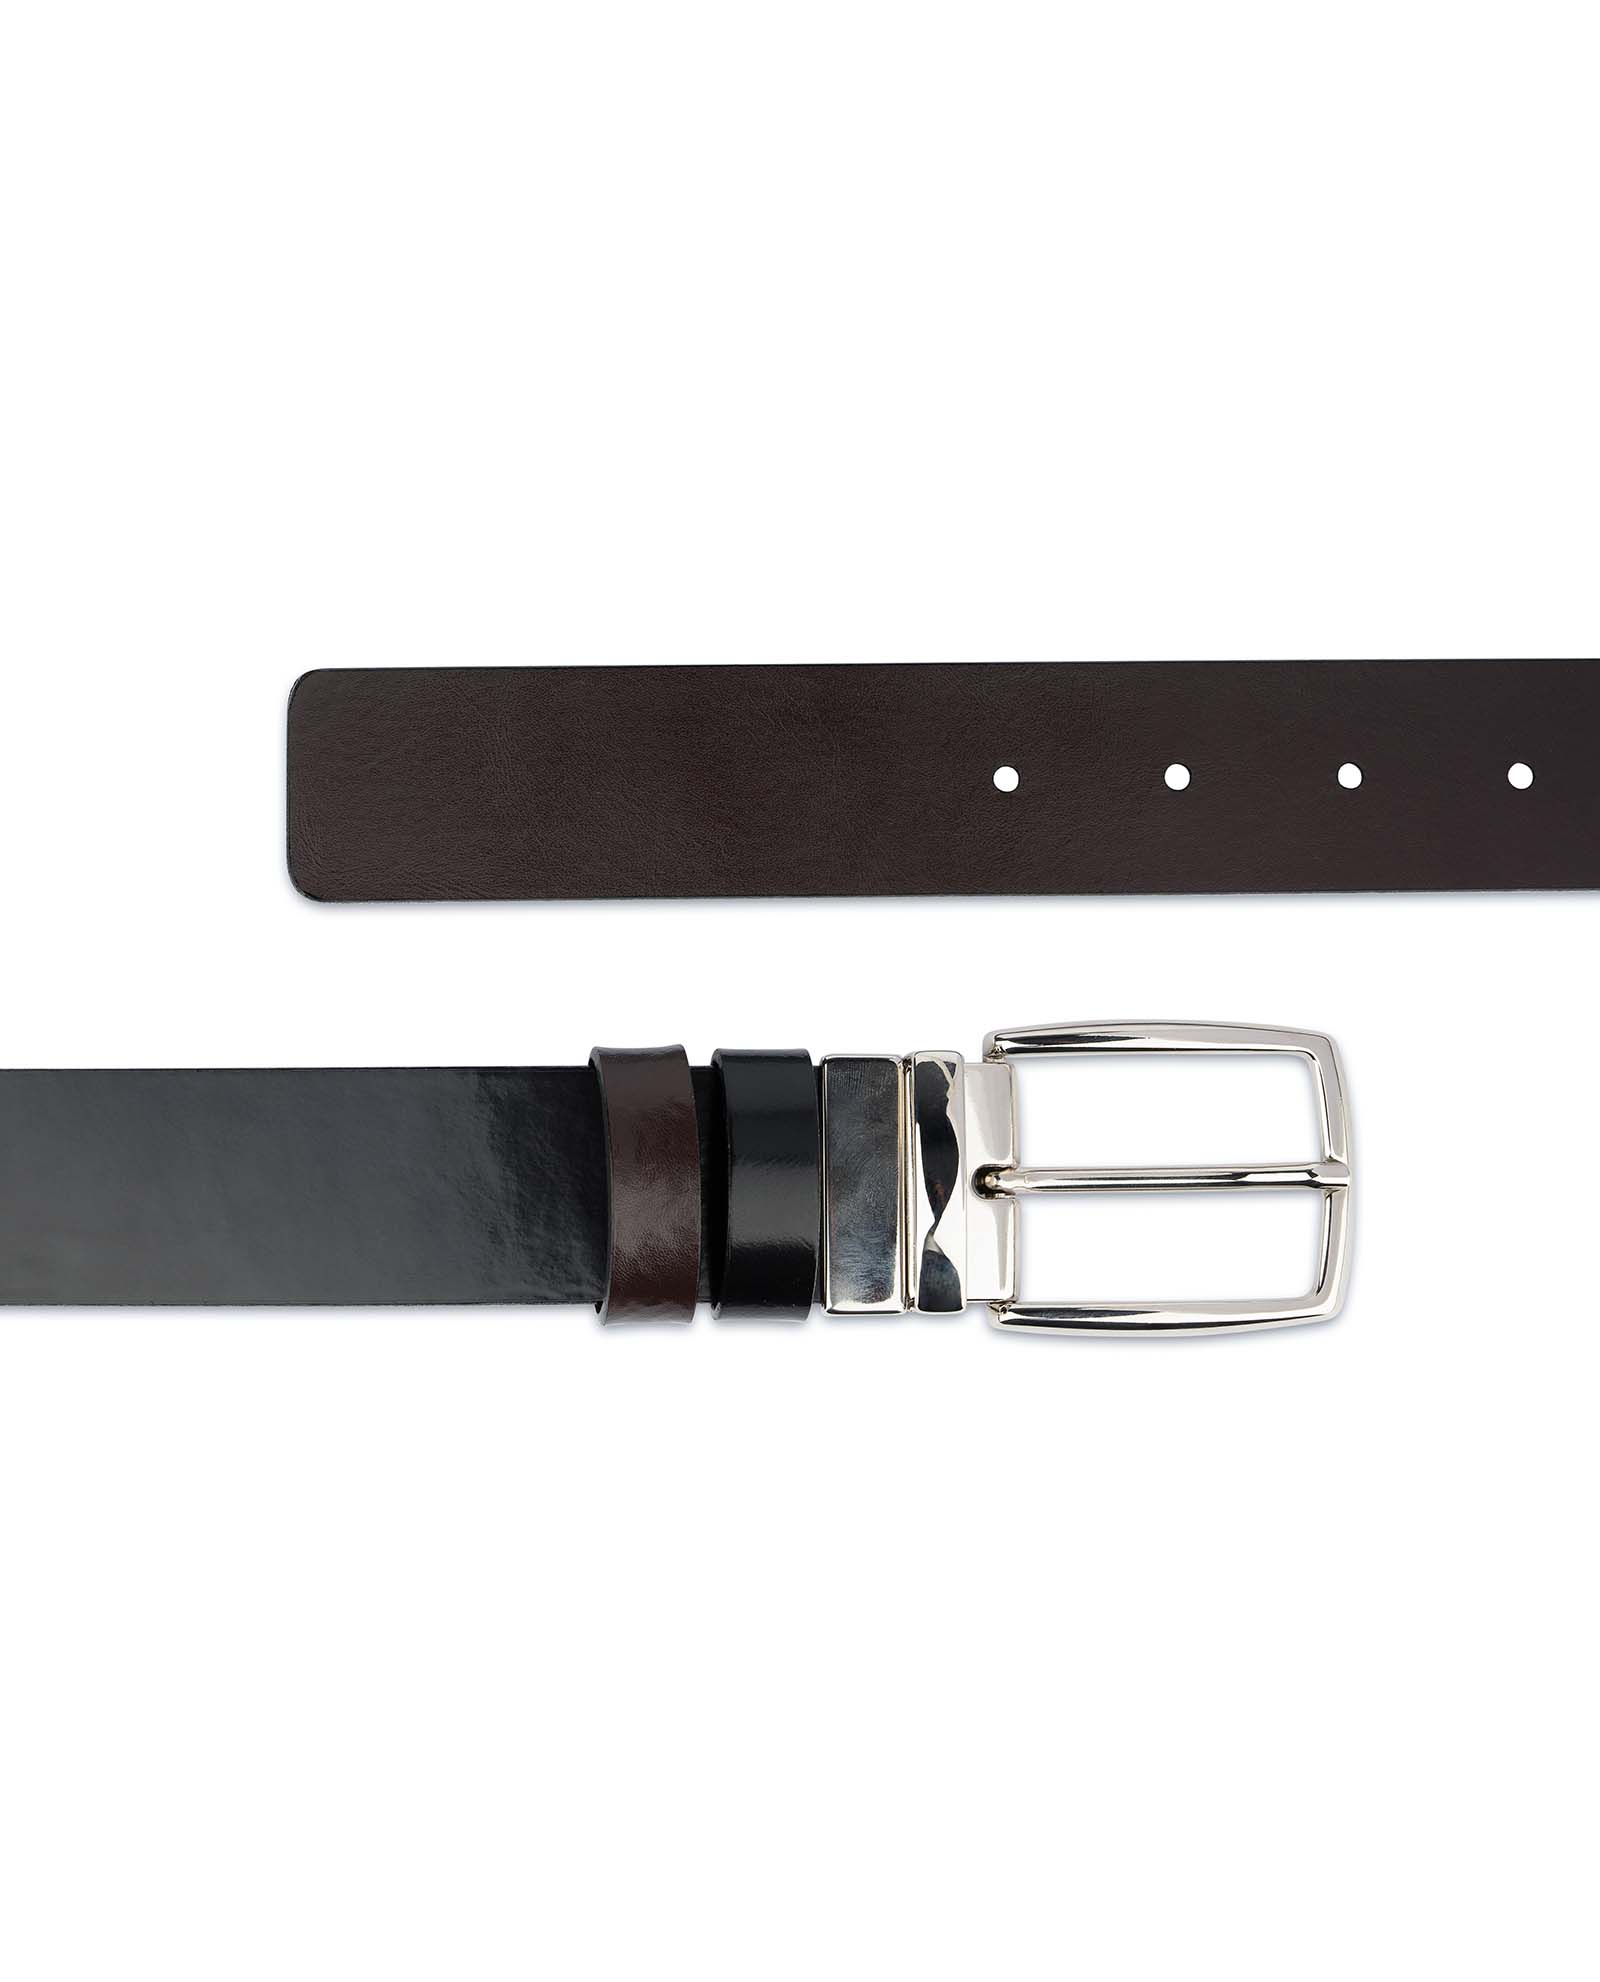 Buy Patent Leather Belt | Reversible Black Brown | Capo Pelle